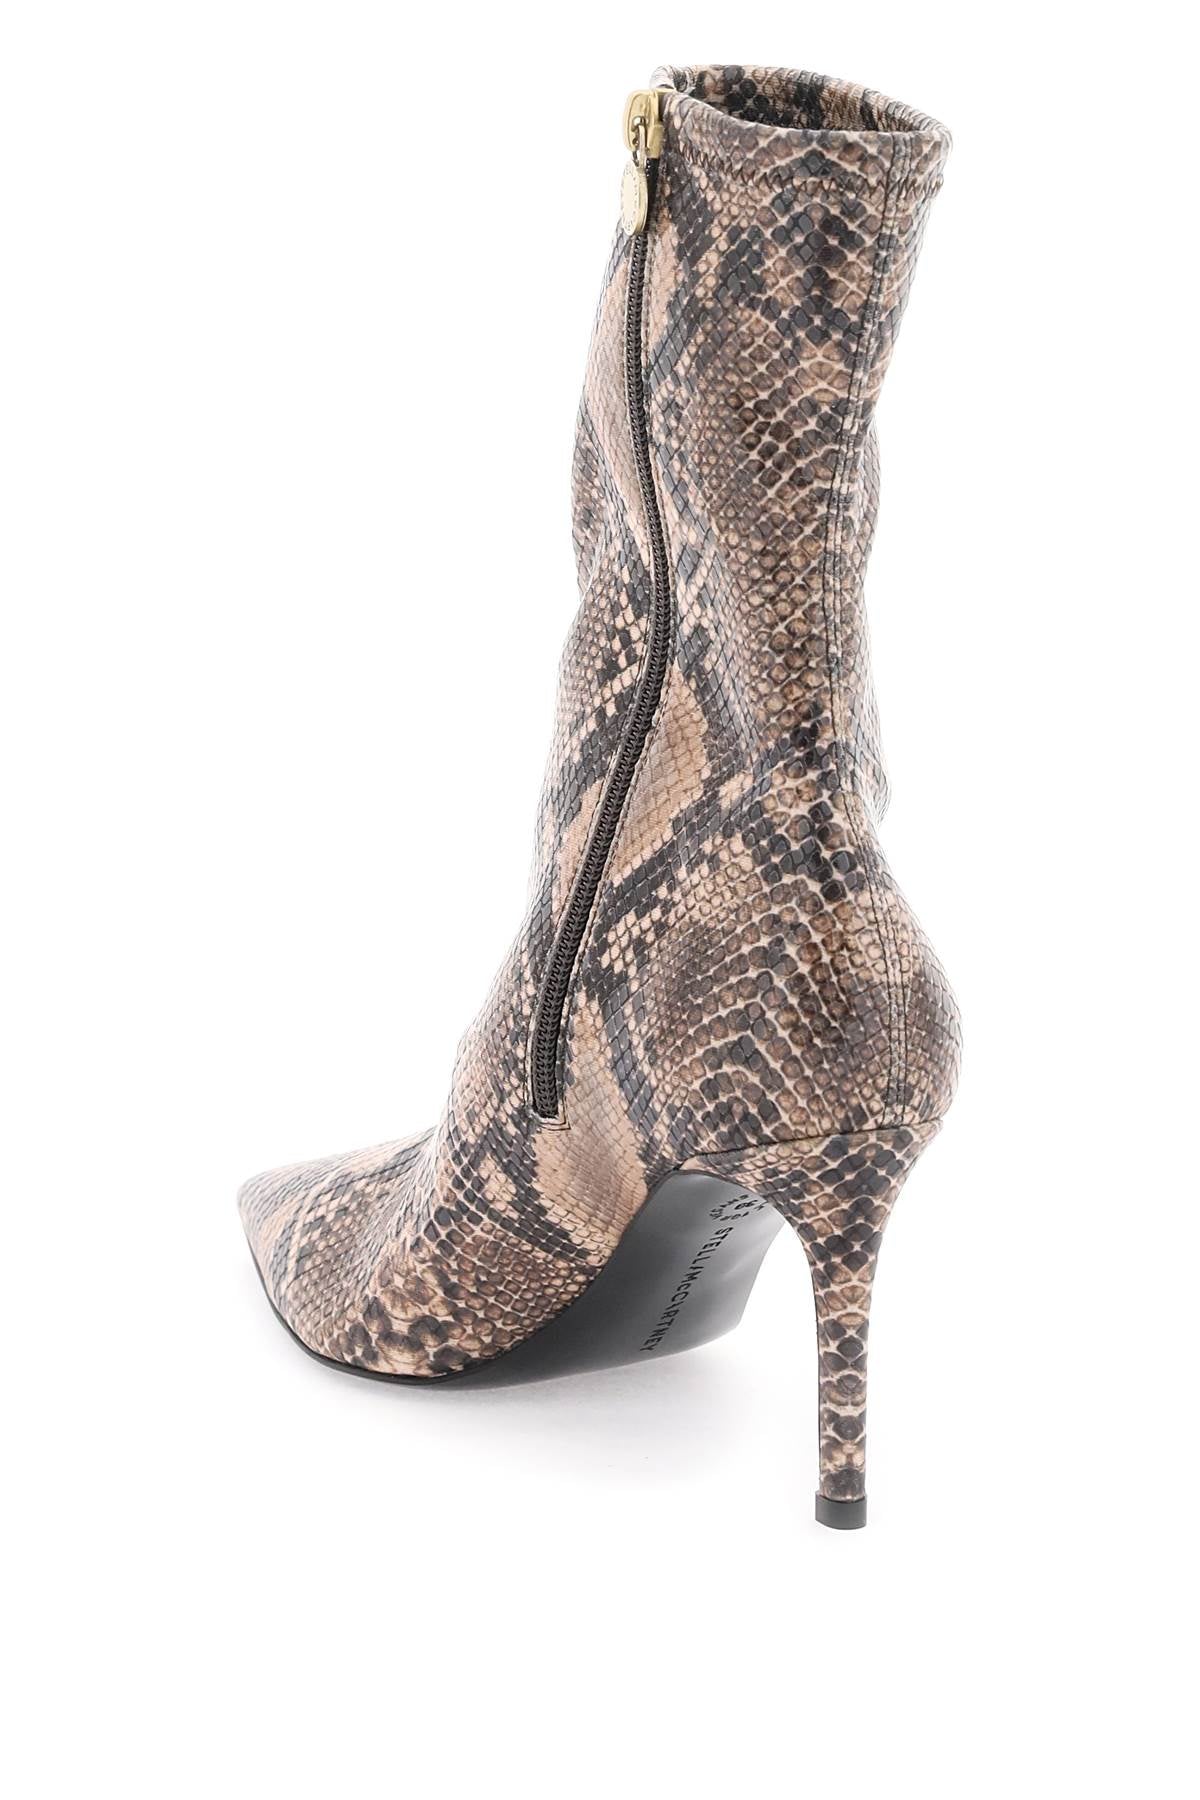 Stella mccartney python print ankle boots-2